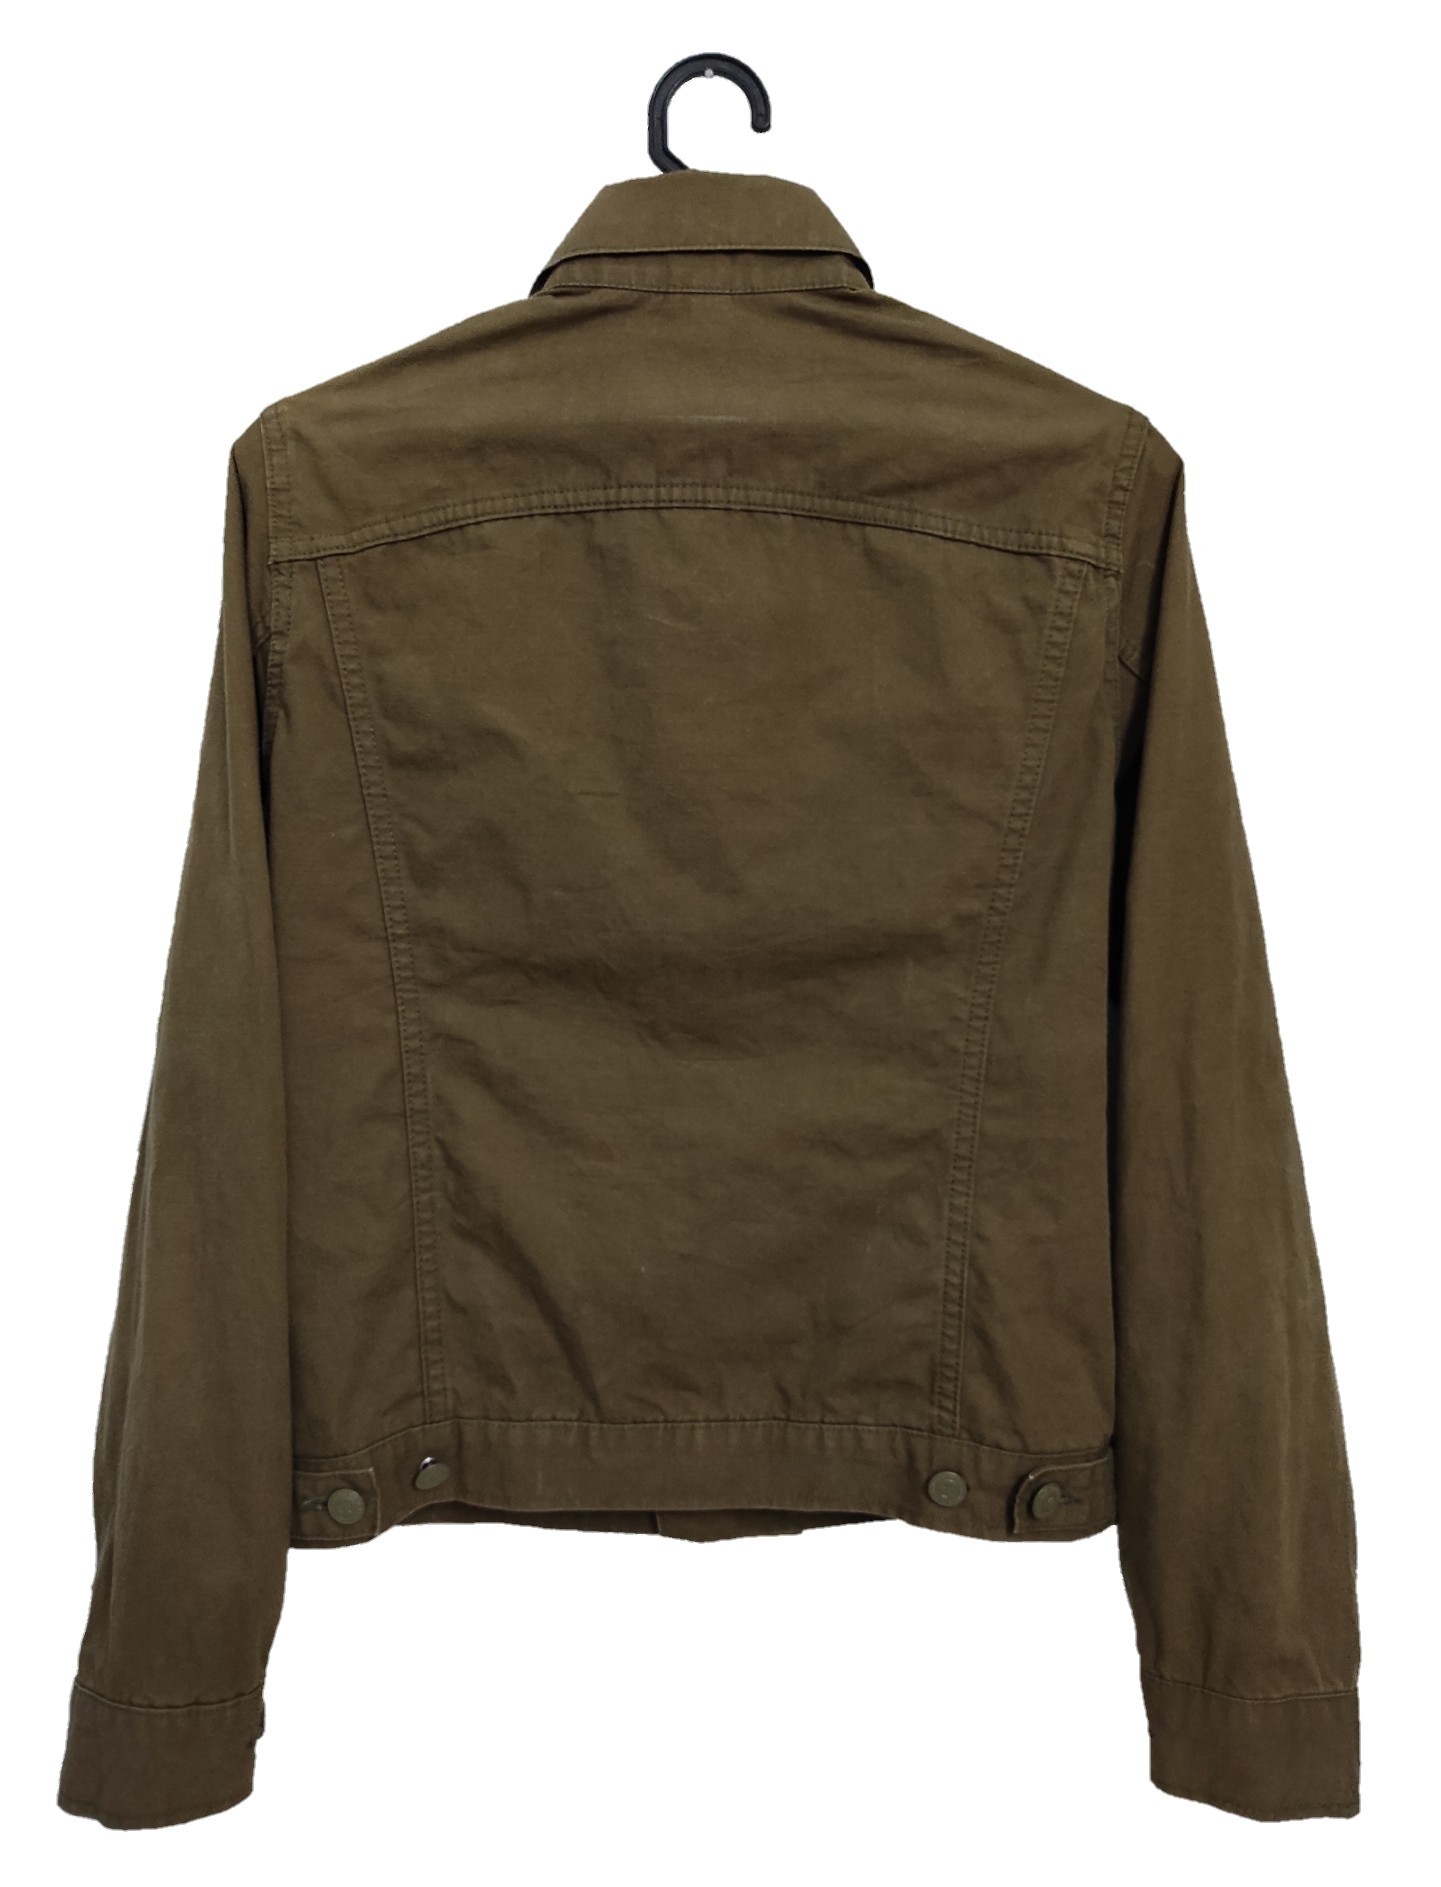 Japanese Brand - FW 2003/04 Revolver canvas khaki green army Oasis jacket - 2